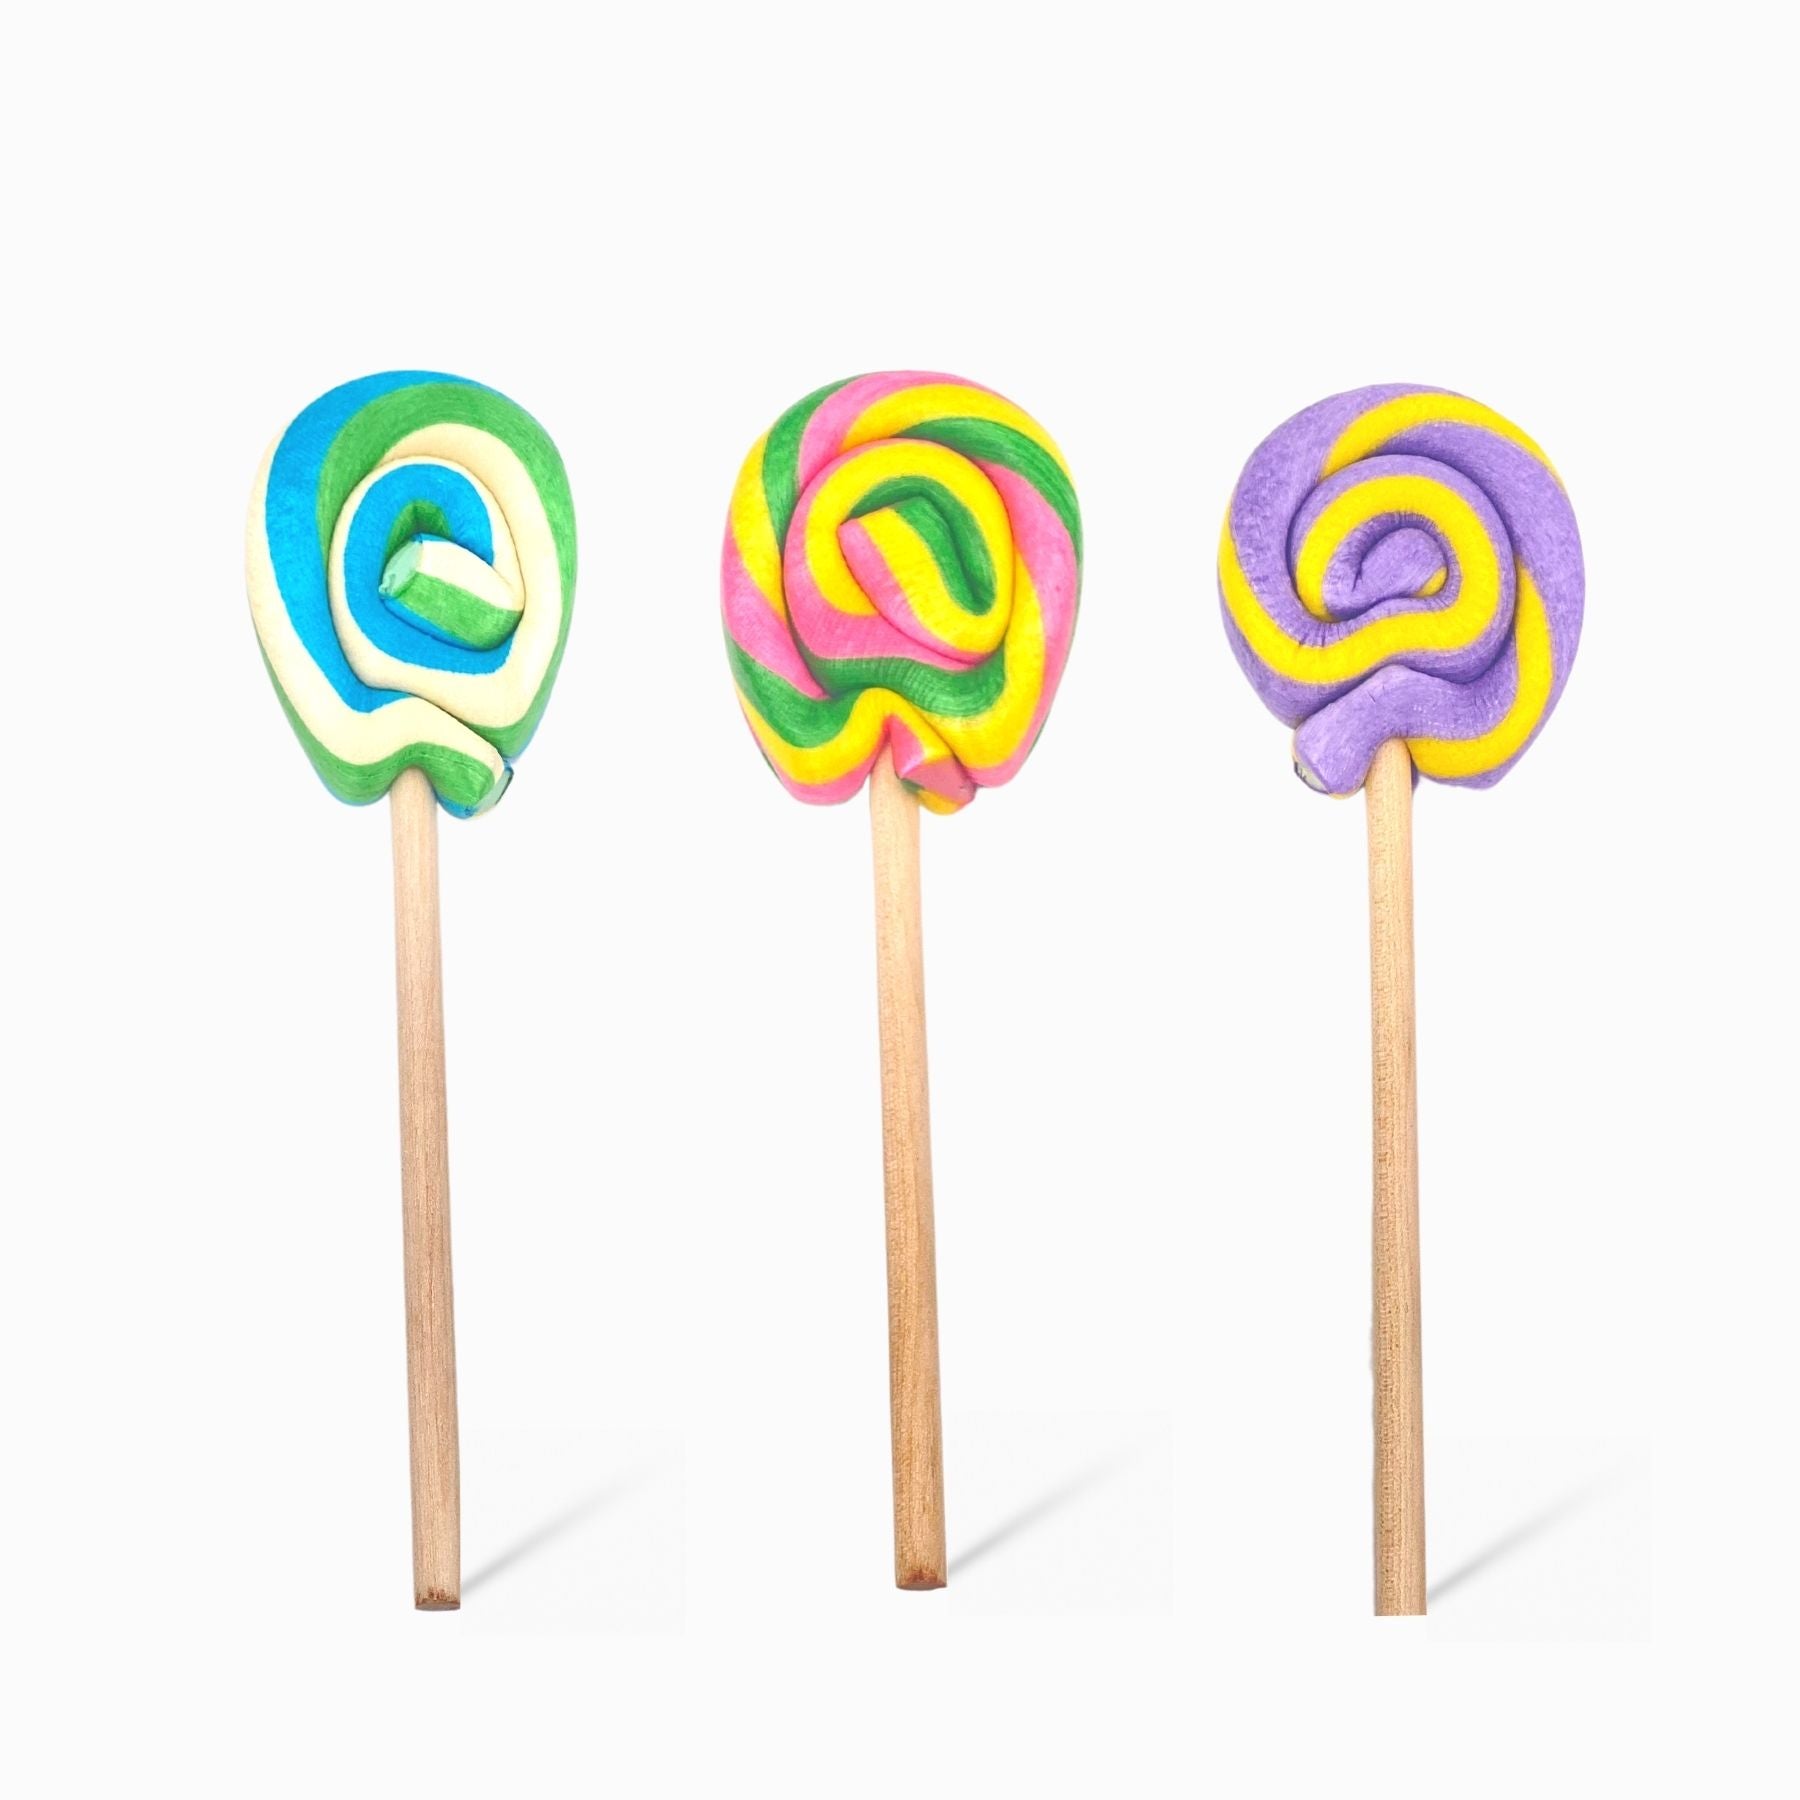 3 Easter Lollipops (1 of each flavor)